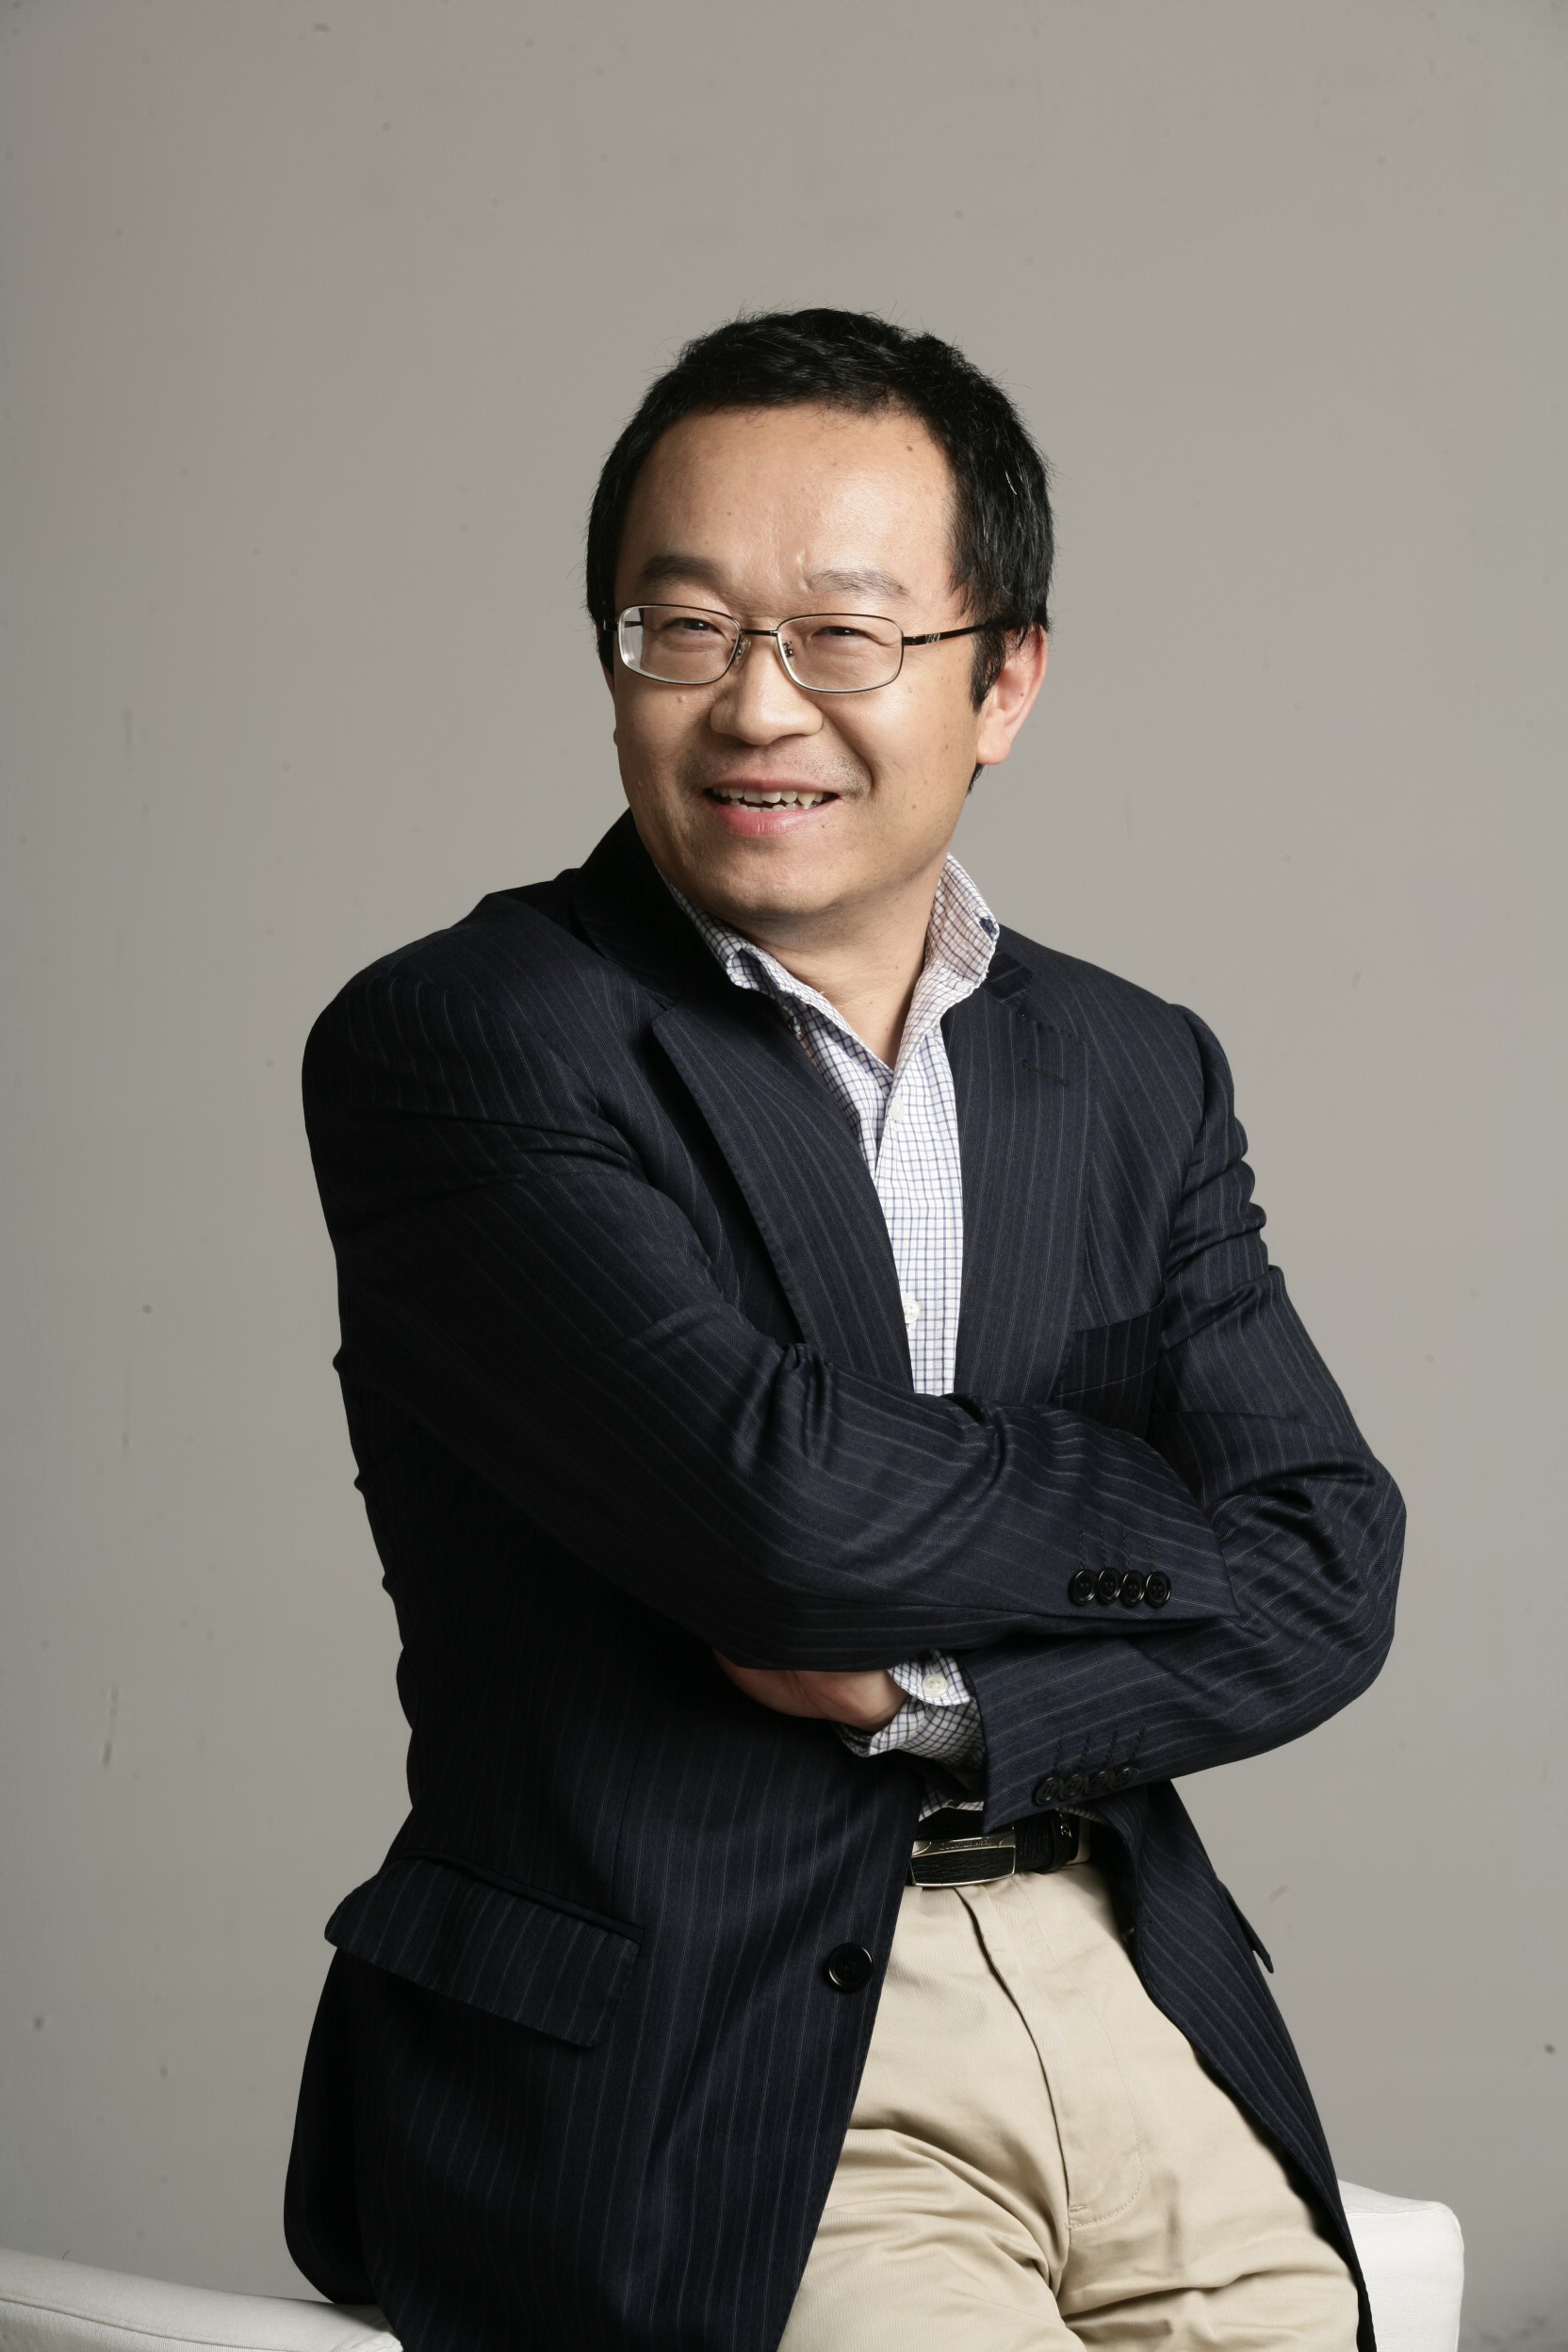 Zhang Jun is professor of economics and director of the China Center for Economic Studies at Fudan University, Shanghai.